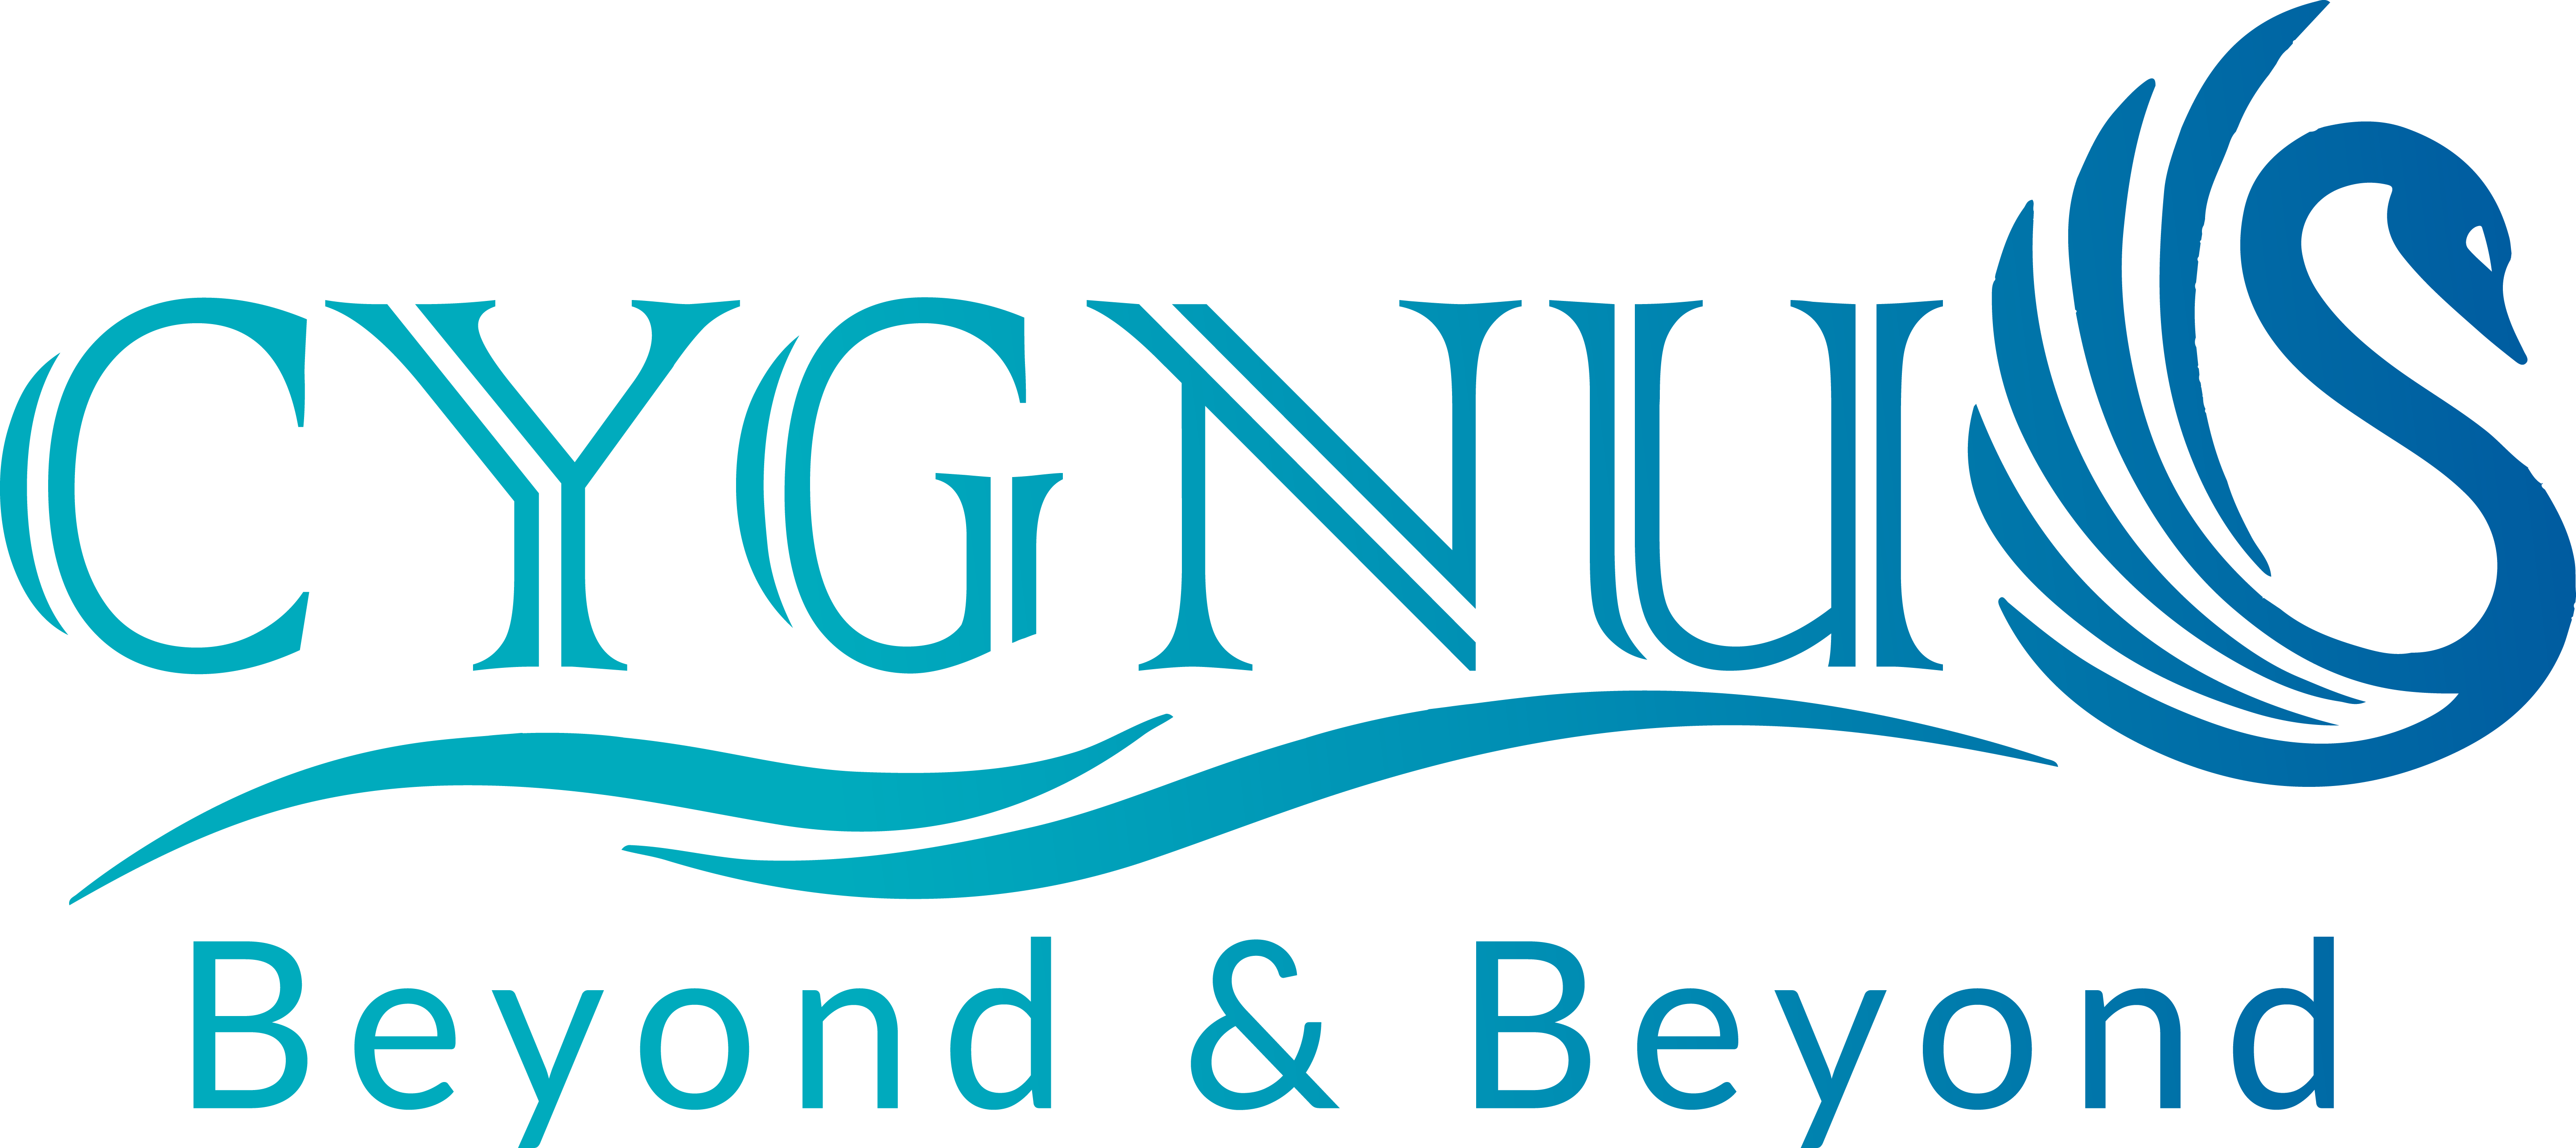 Cygnus Logistics